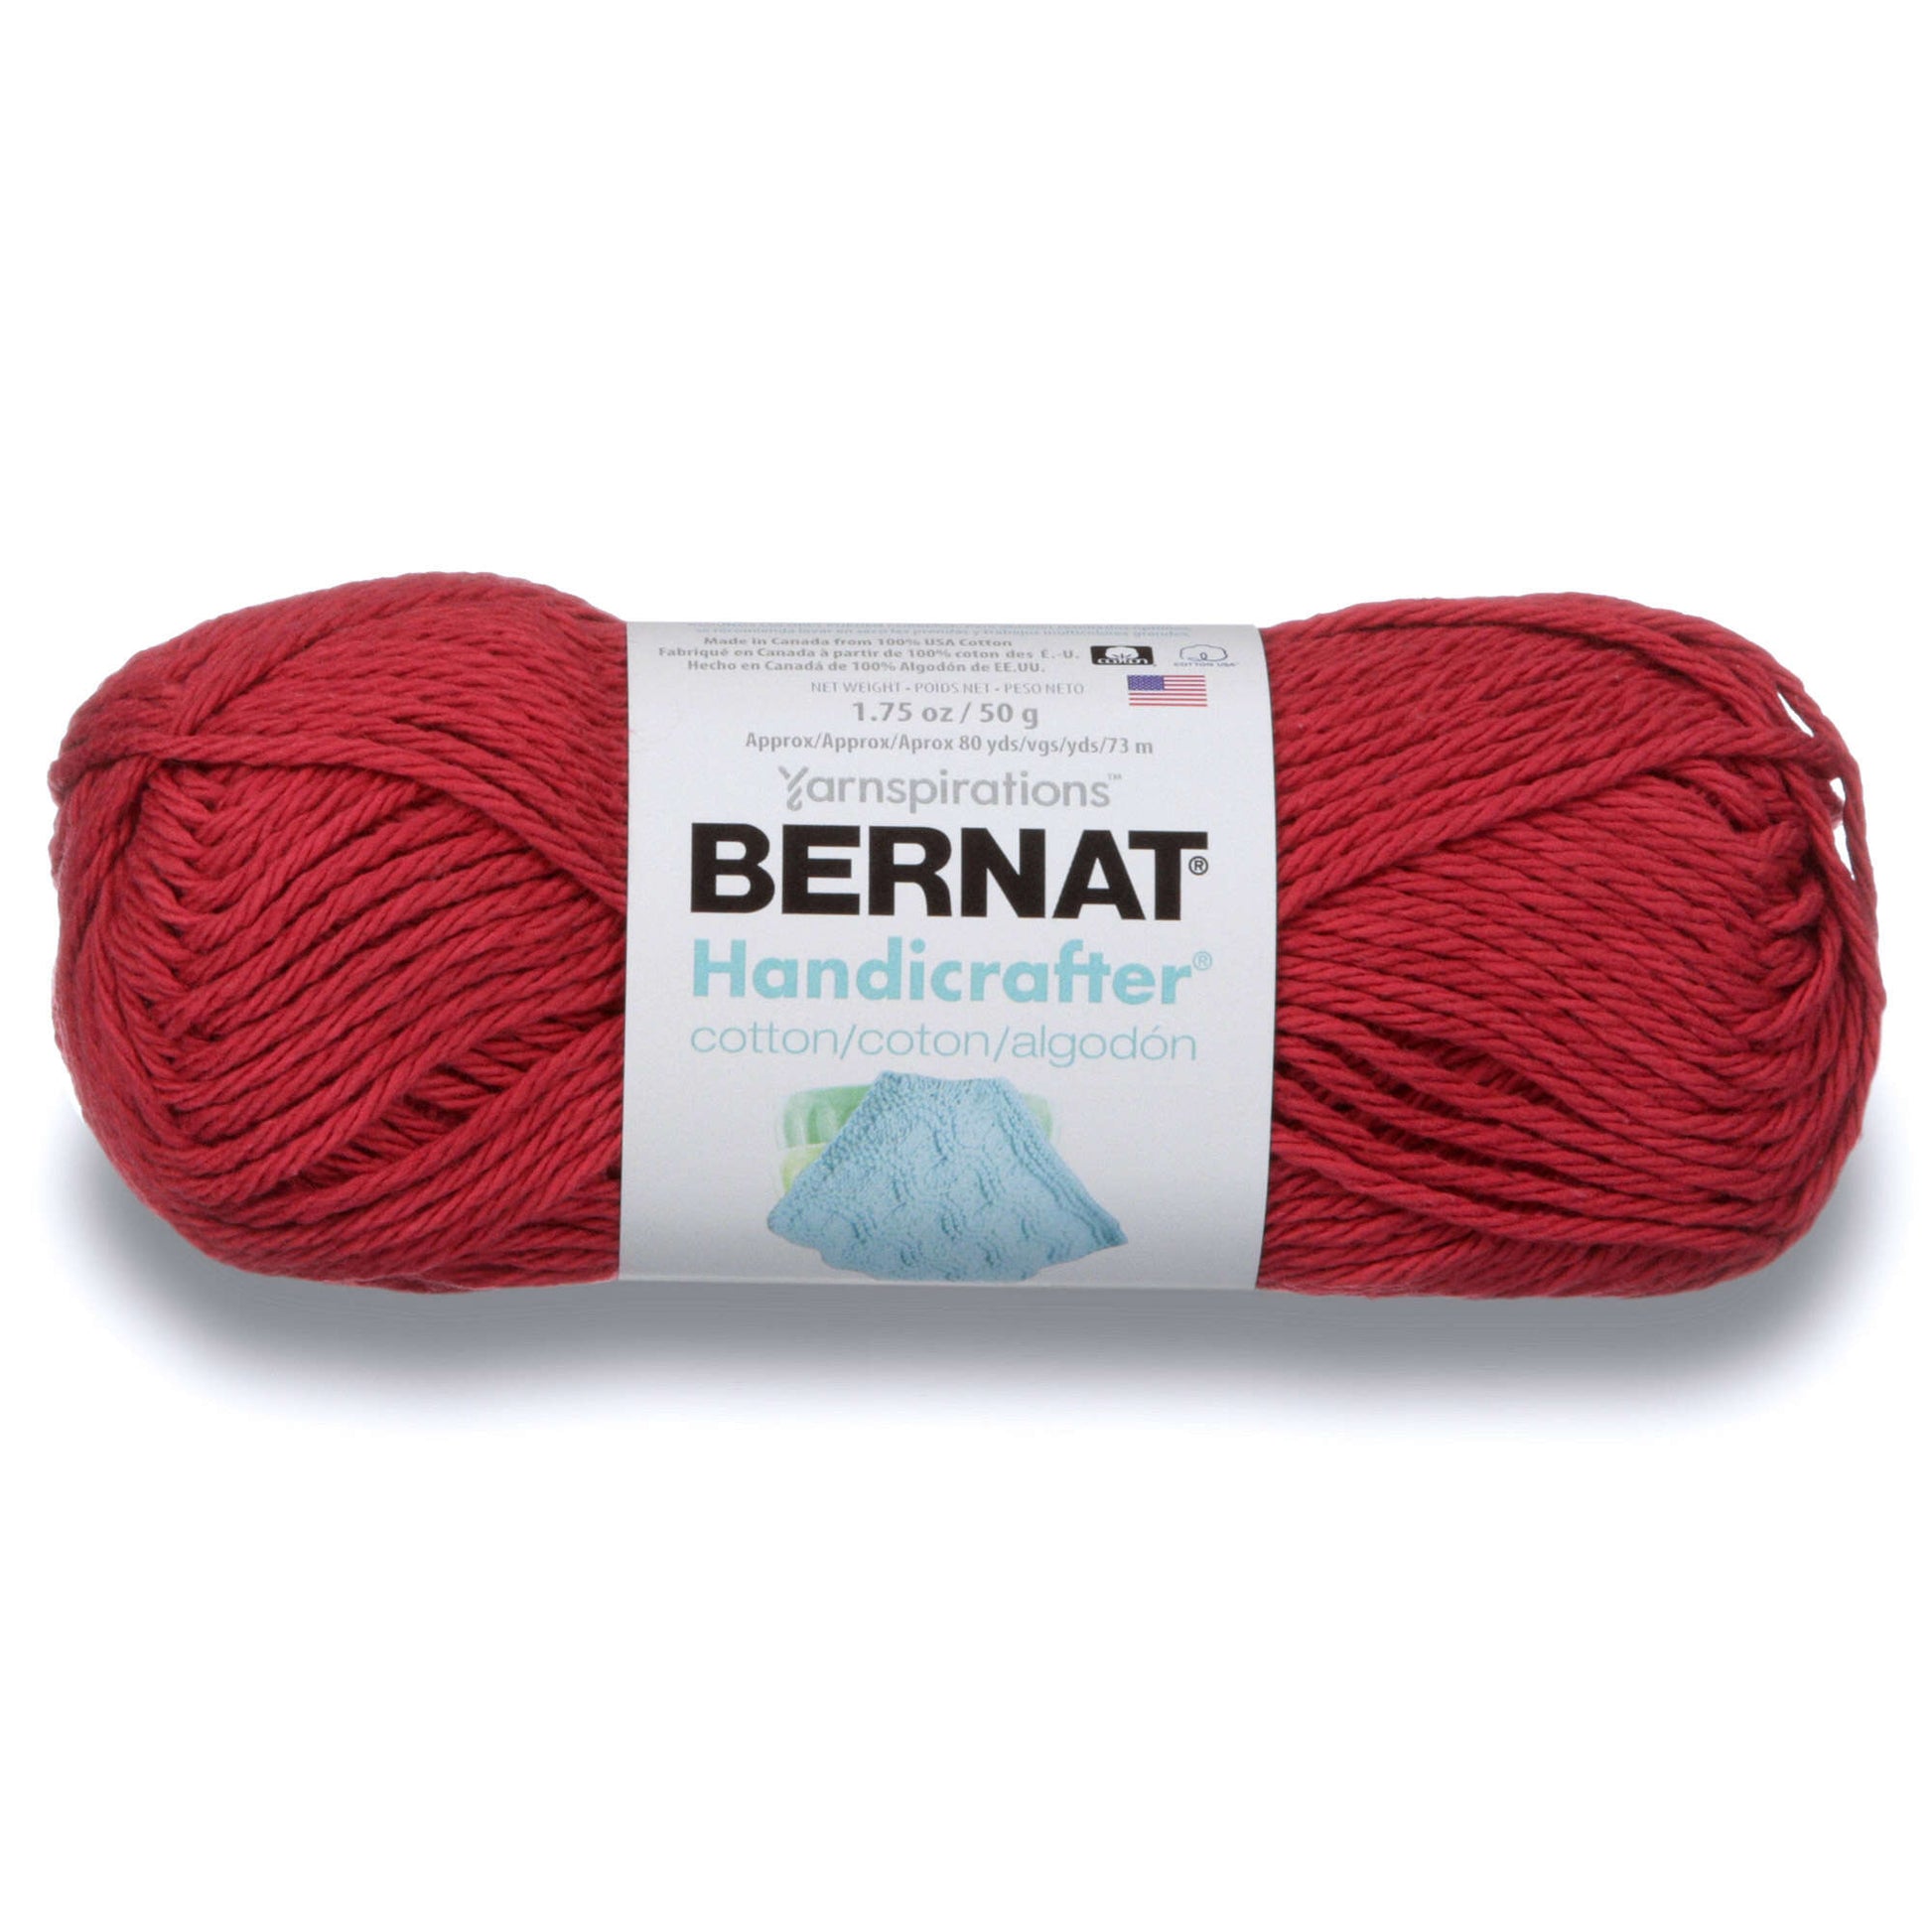 Bernat Handicrafter Cotton Yarn Country Red